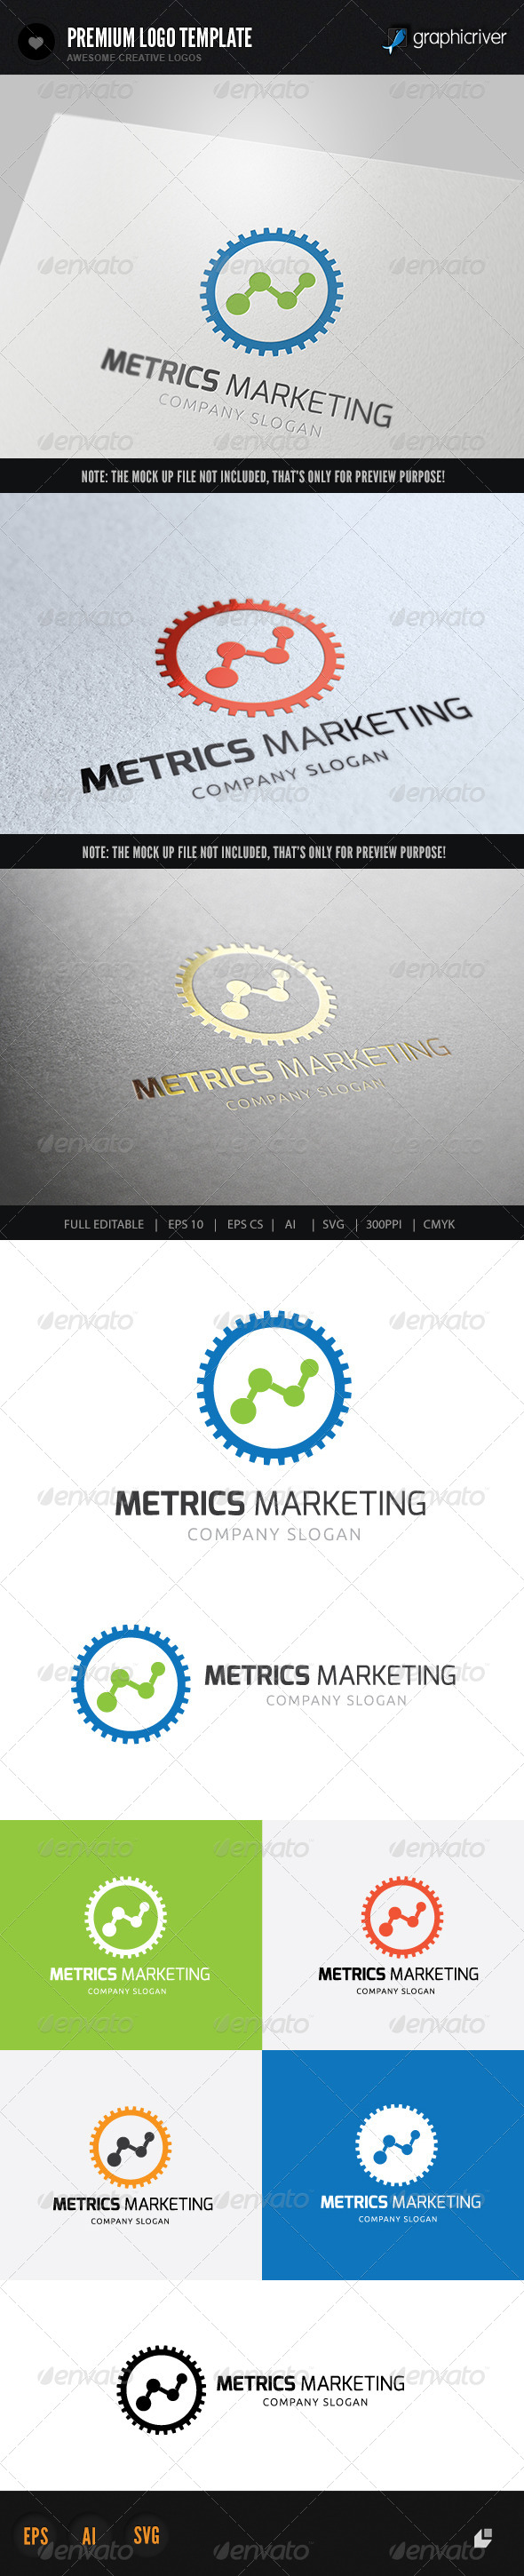 Metrics Marketing